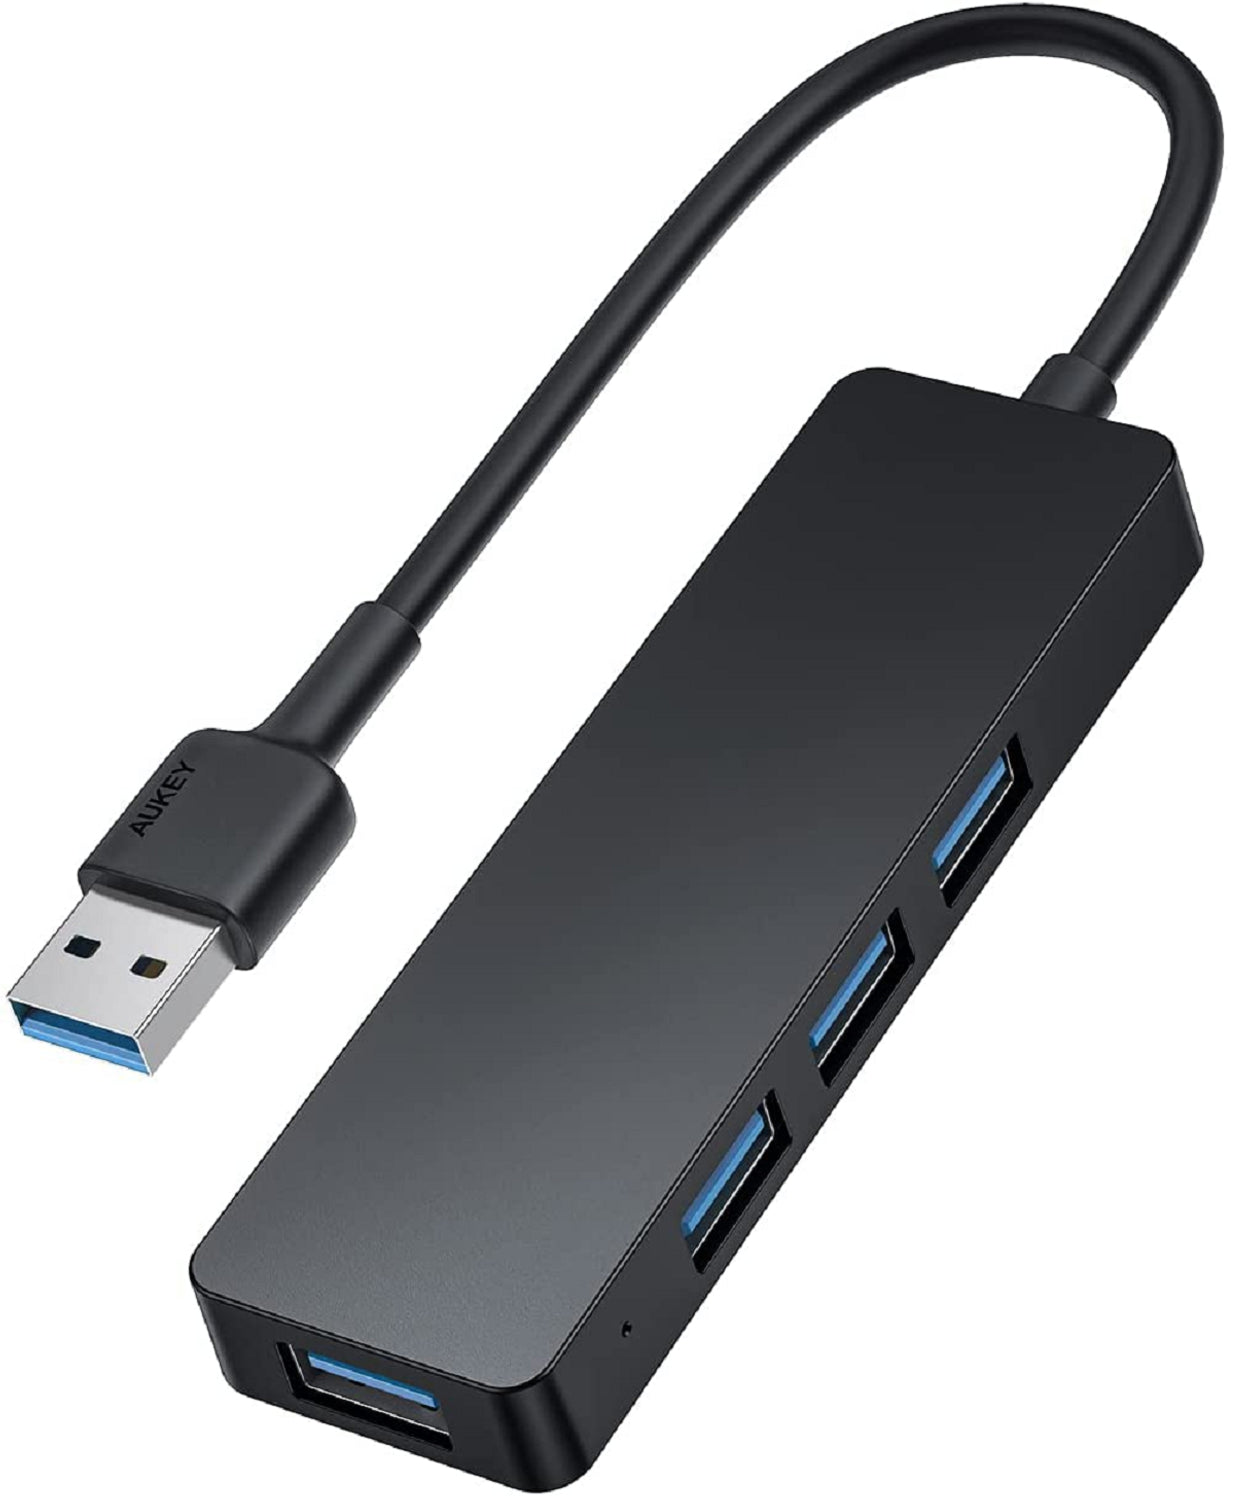 AUKEY USB 3.0 Hub, 4-in-1 USB A Adapter CB-H39,